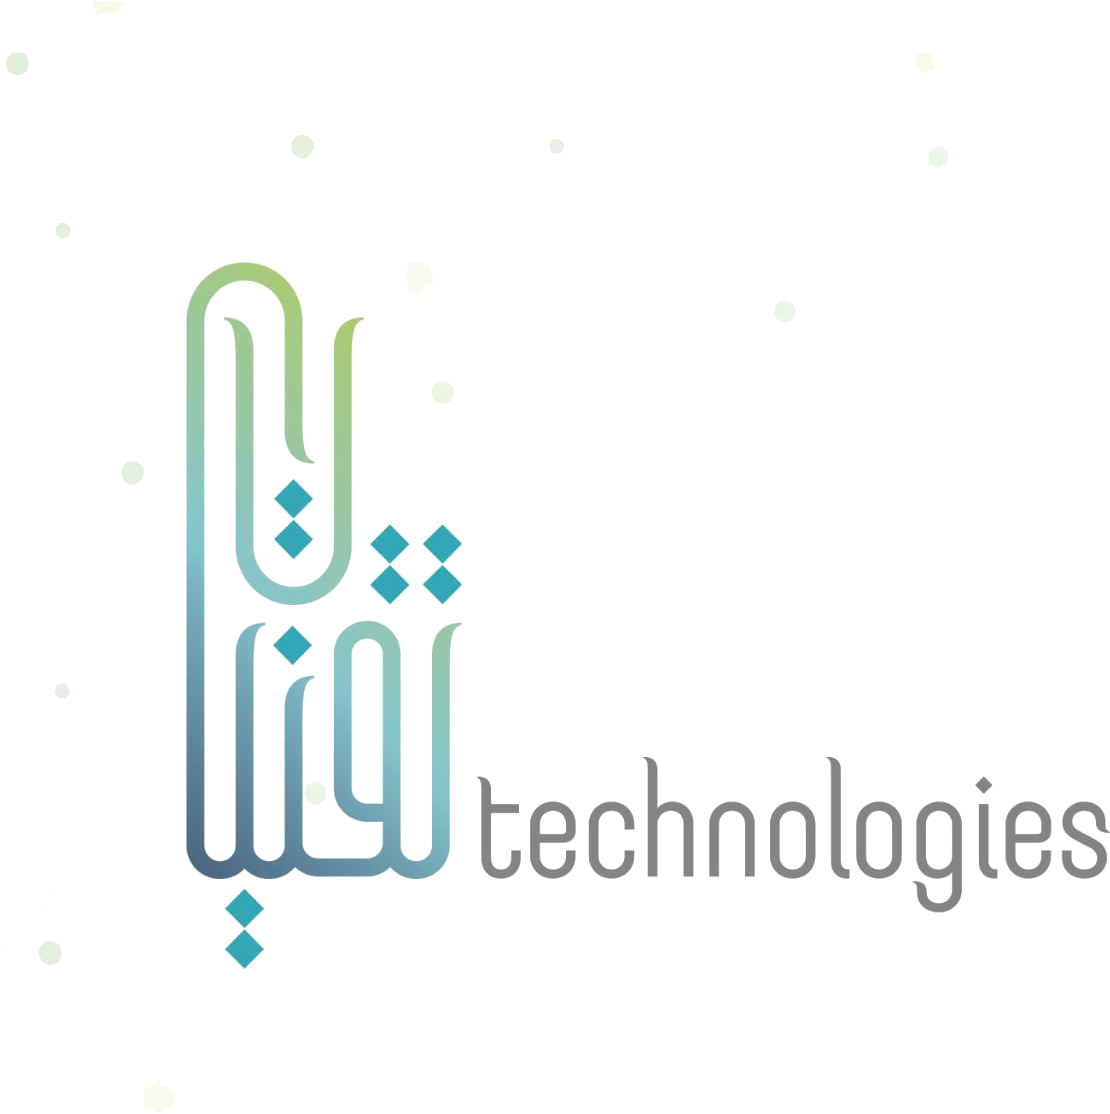 UAE Technologies